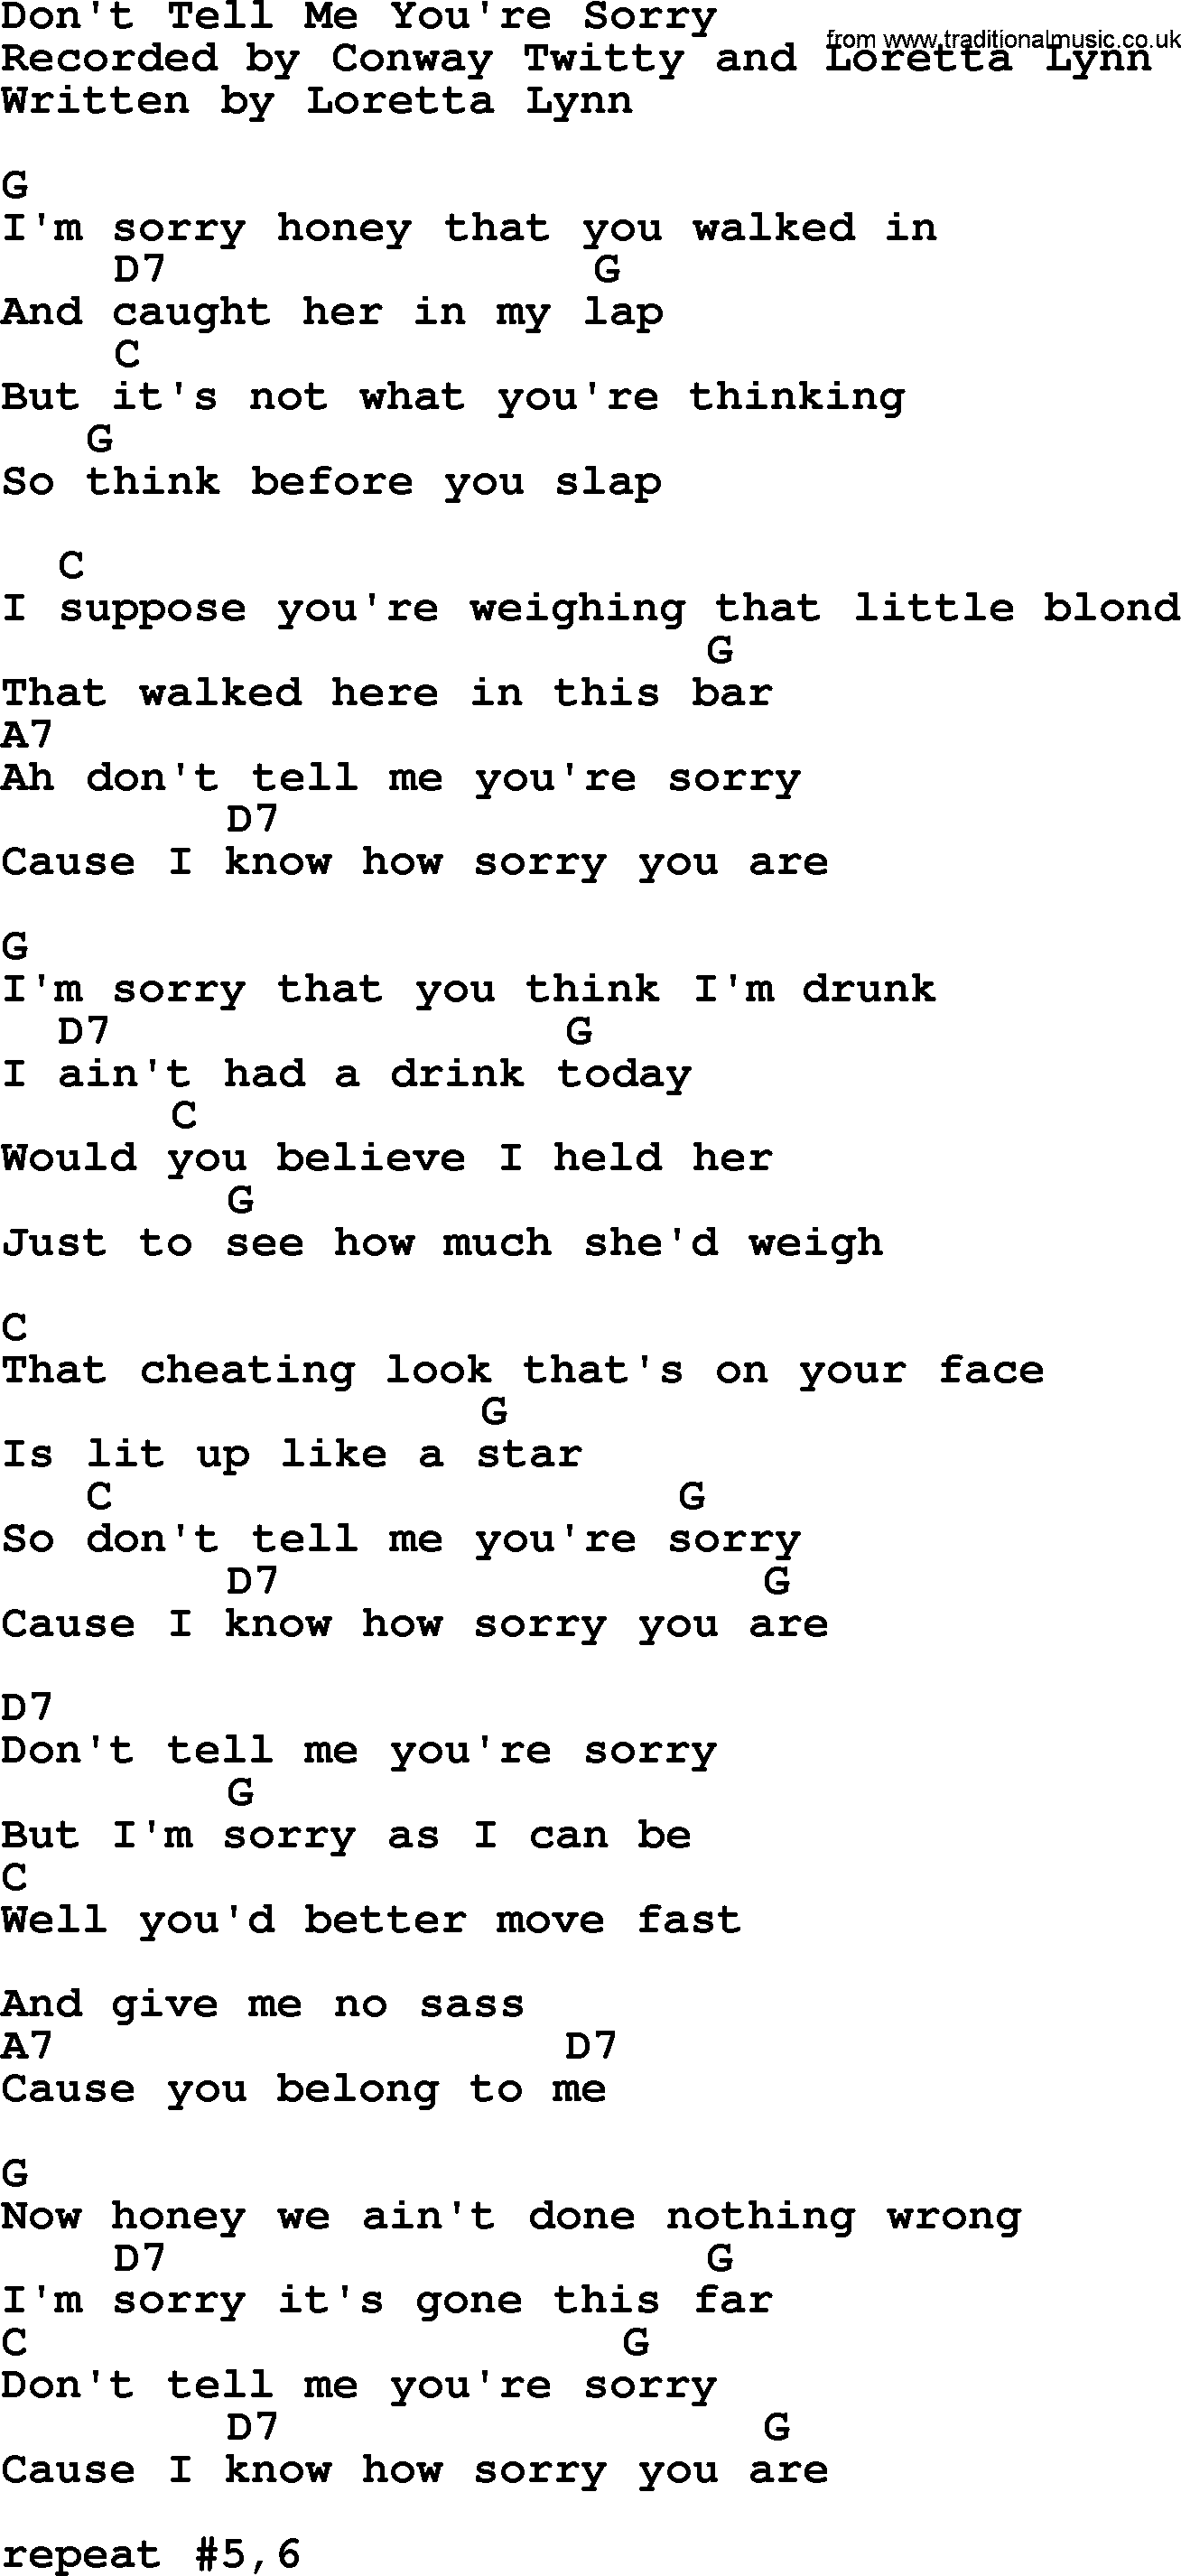 Loretta Lynn song: Don't Tell Me You're Sorry lyrics and chords